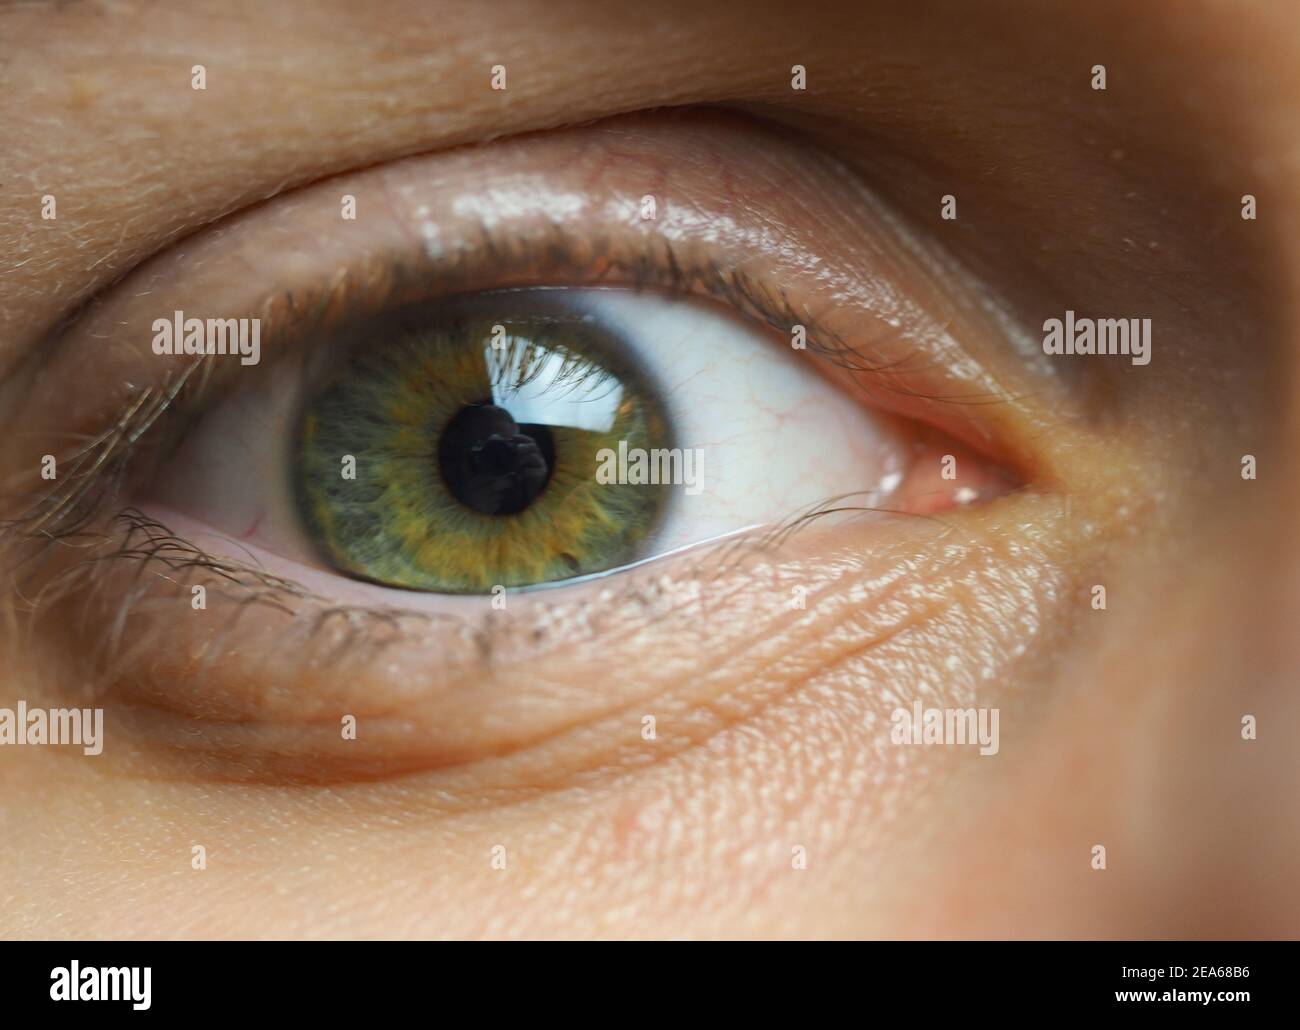 A man's eye. Macrophotography of the human eye. Stock Photo